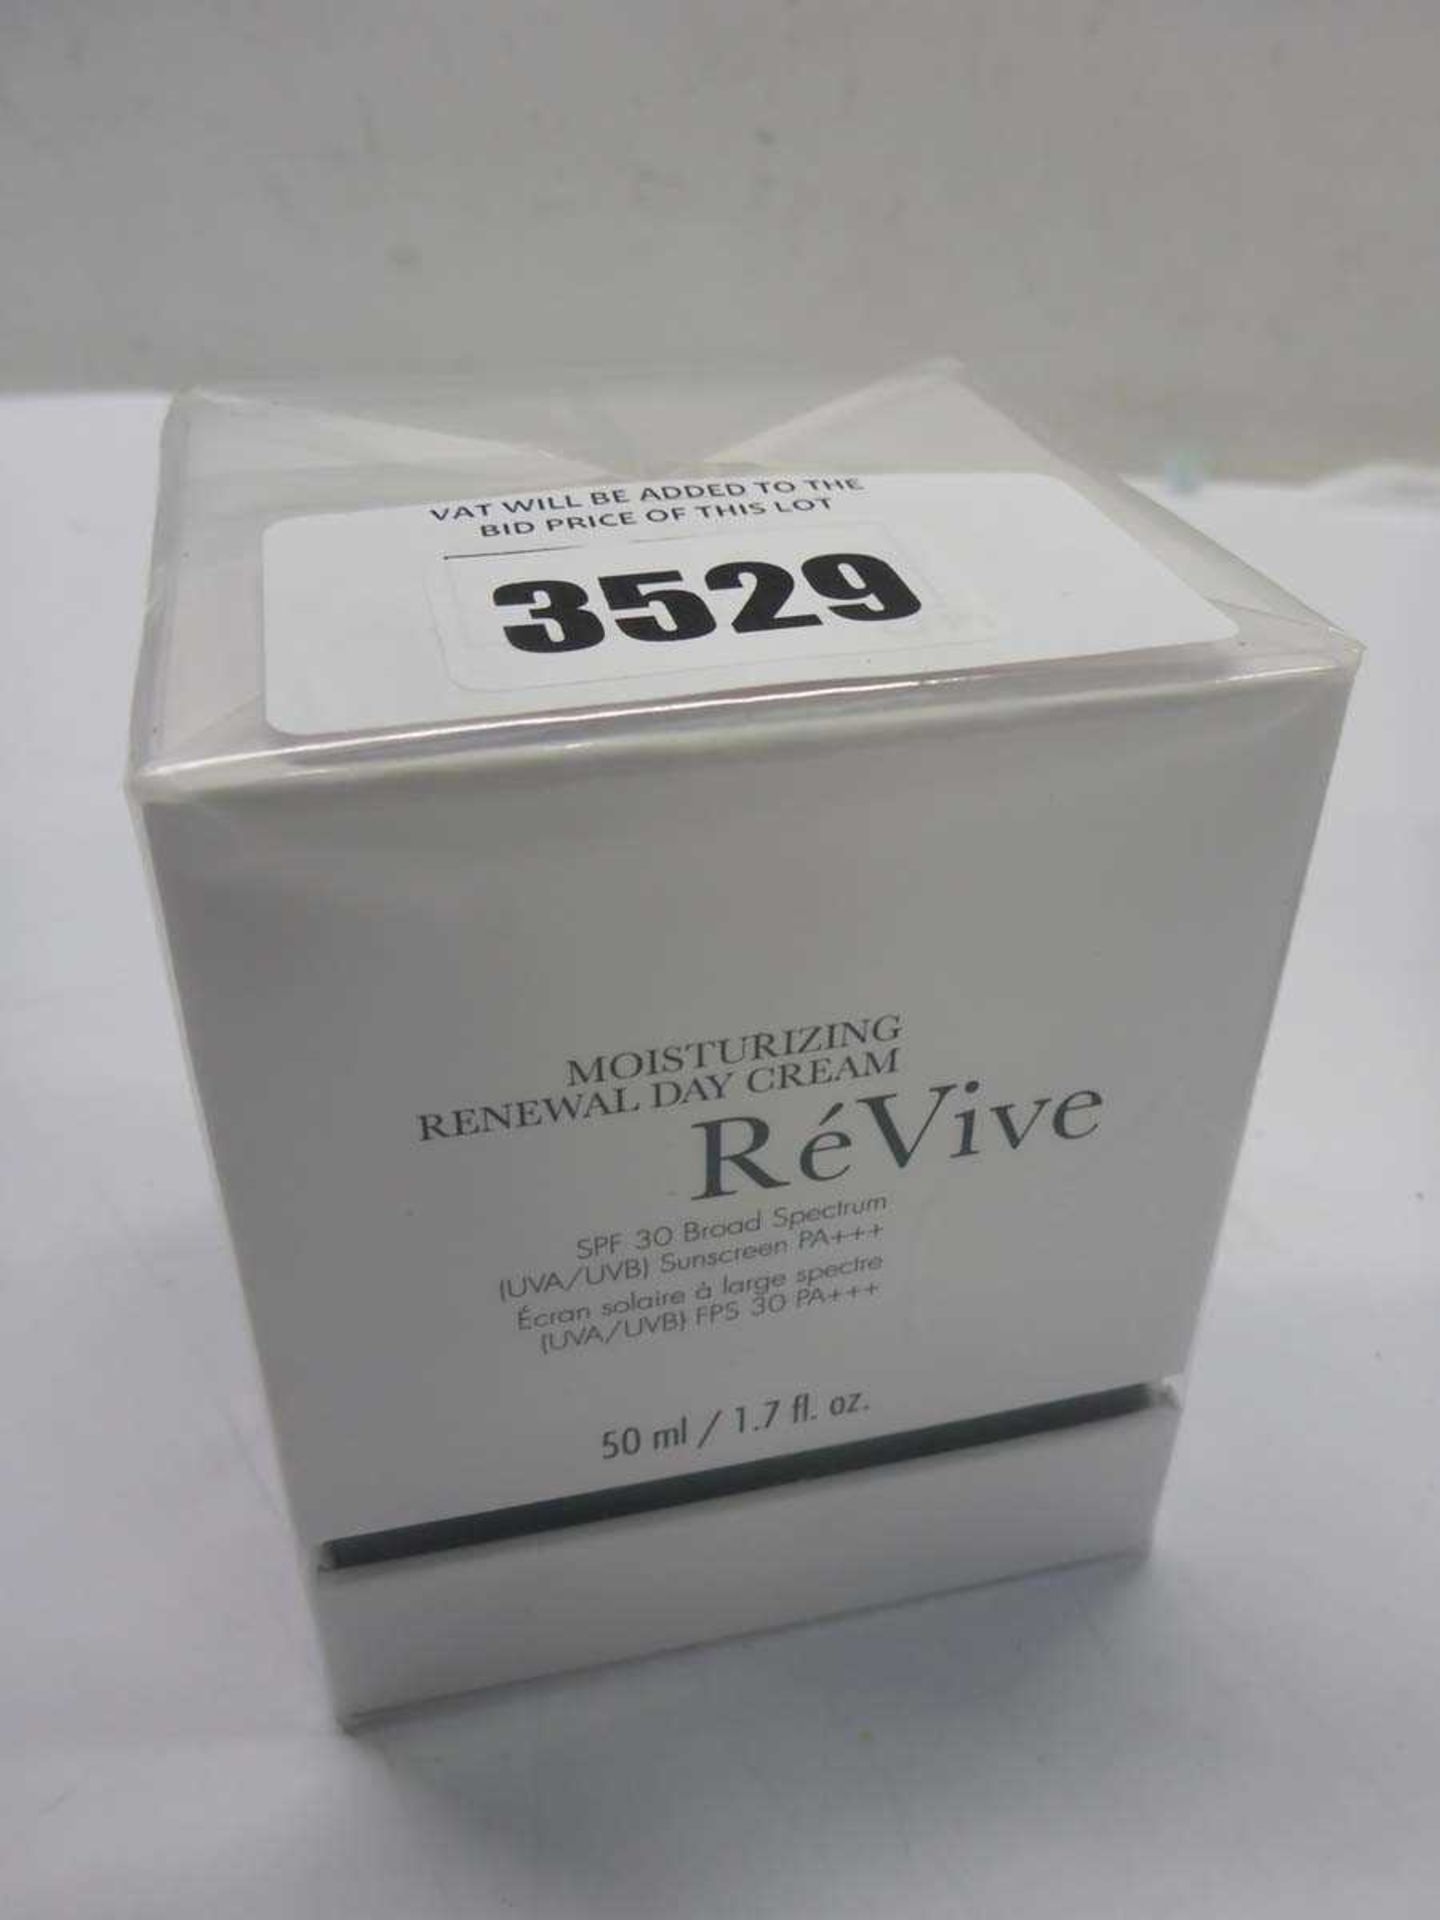 +VAT ReVive moisturizing renewal day cream 50ml